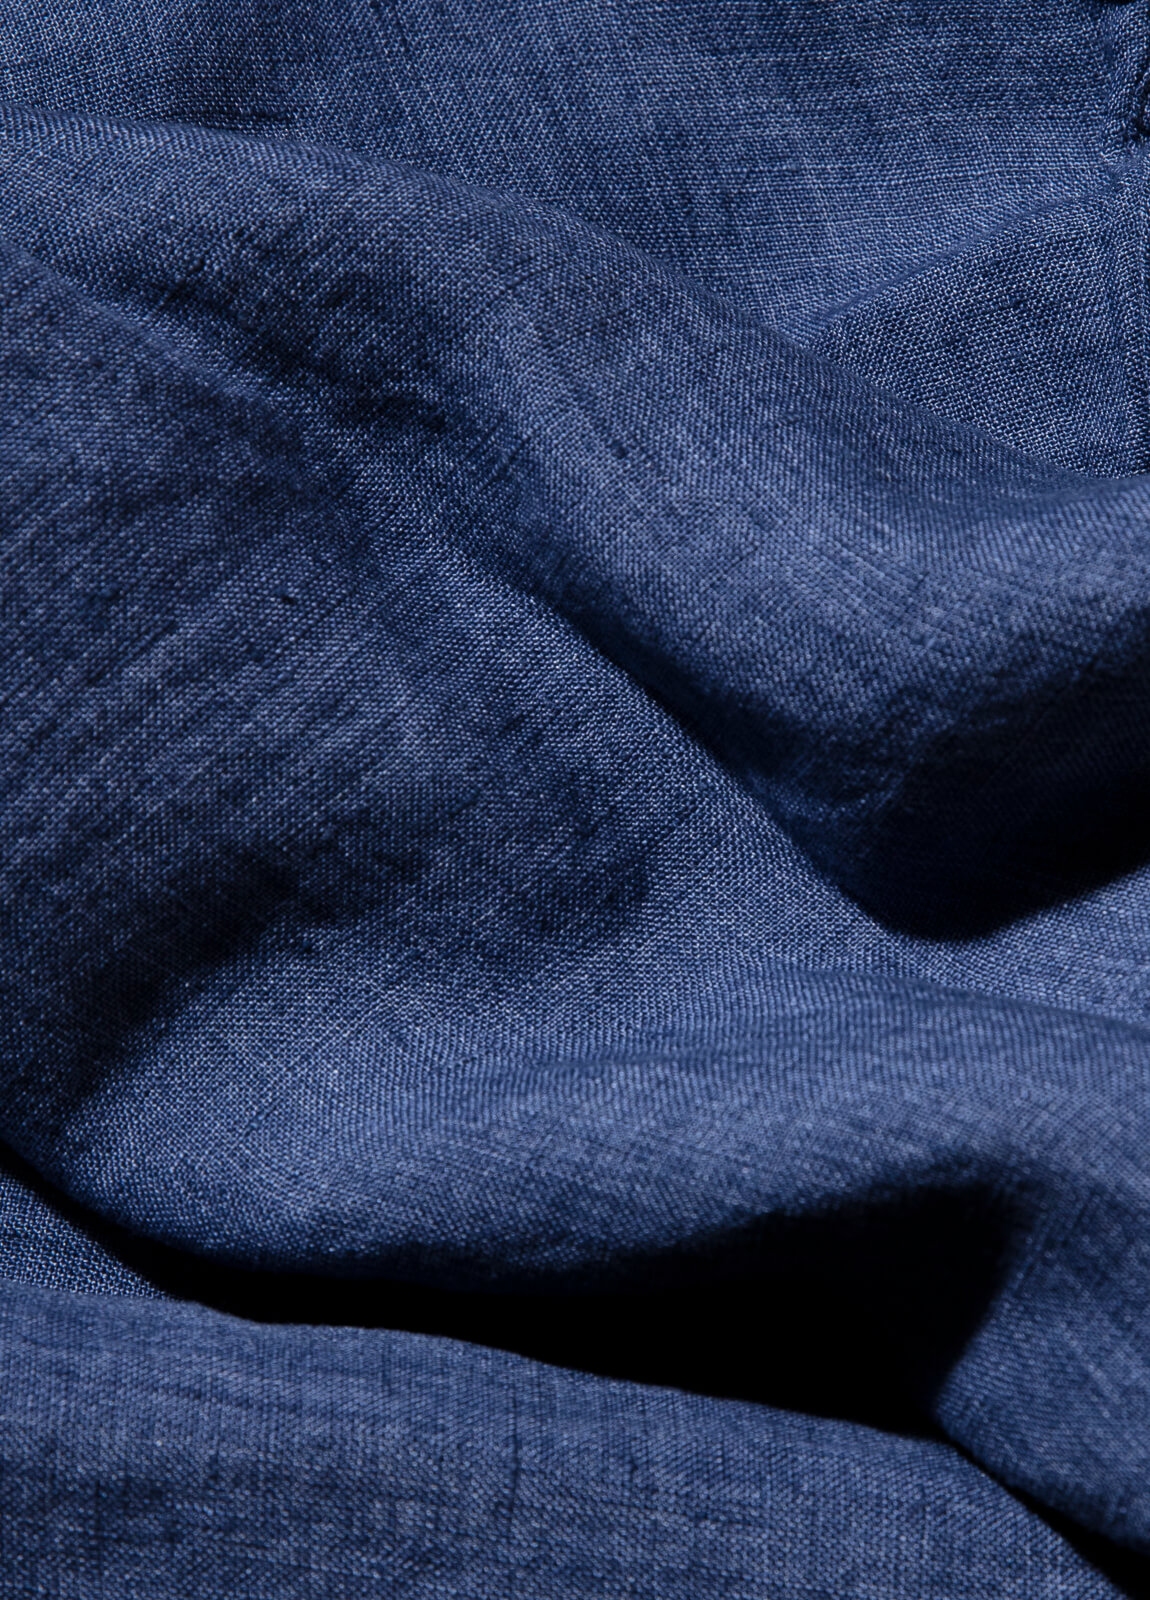 Camisa sport FUREST COLECCIÓN lino azul índigo - Ítem3